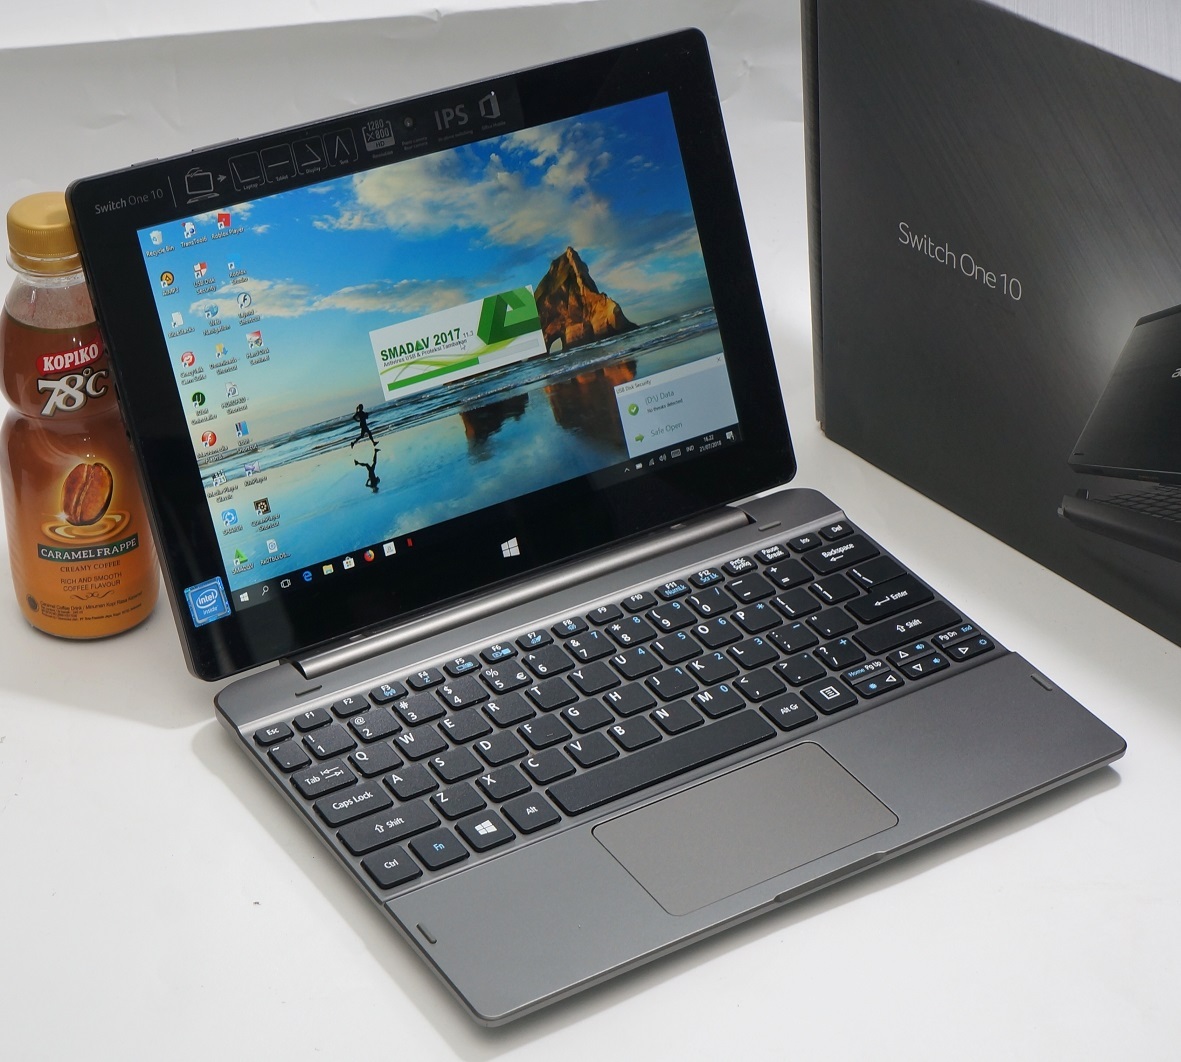 Jual Beli Laptop Second dan Kamera Bekas di Malang: laptop 